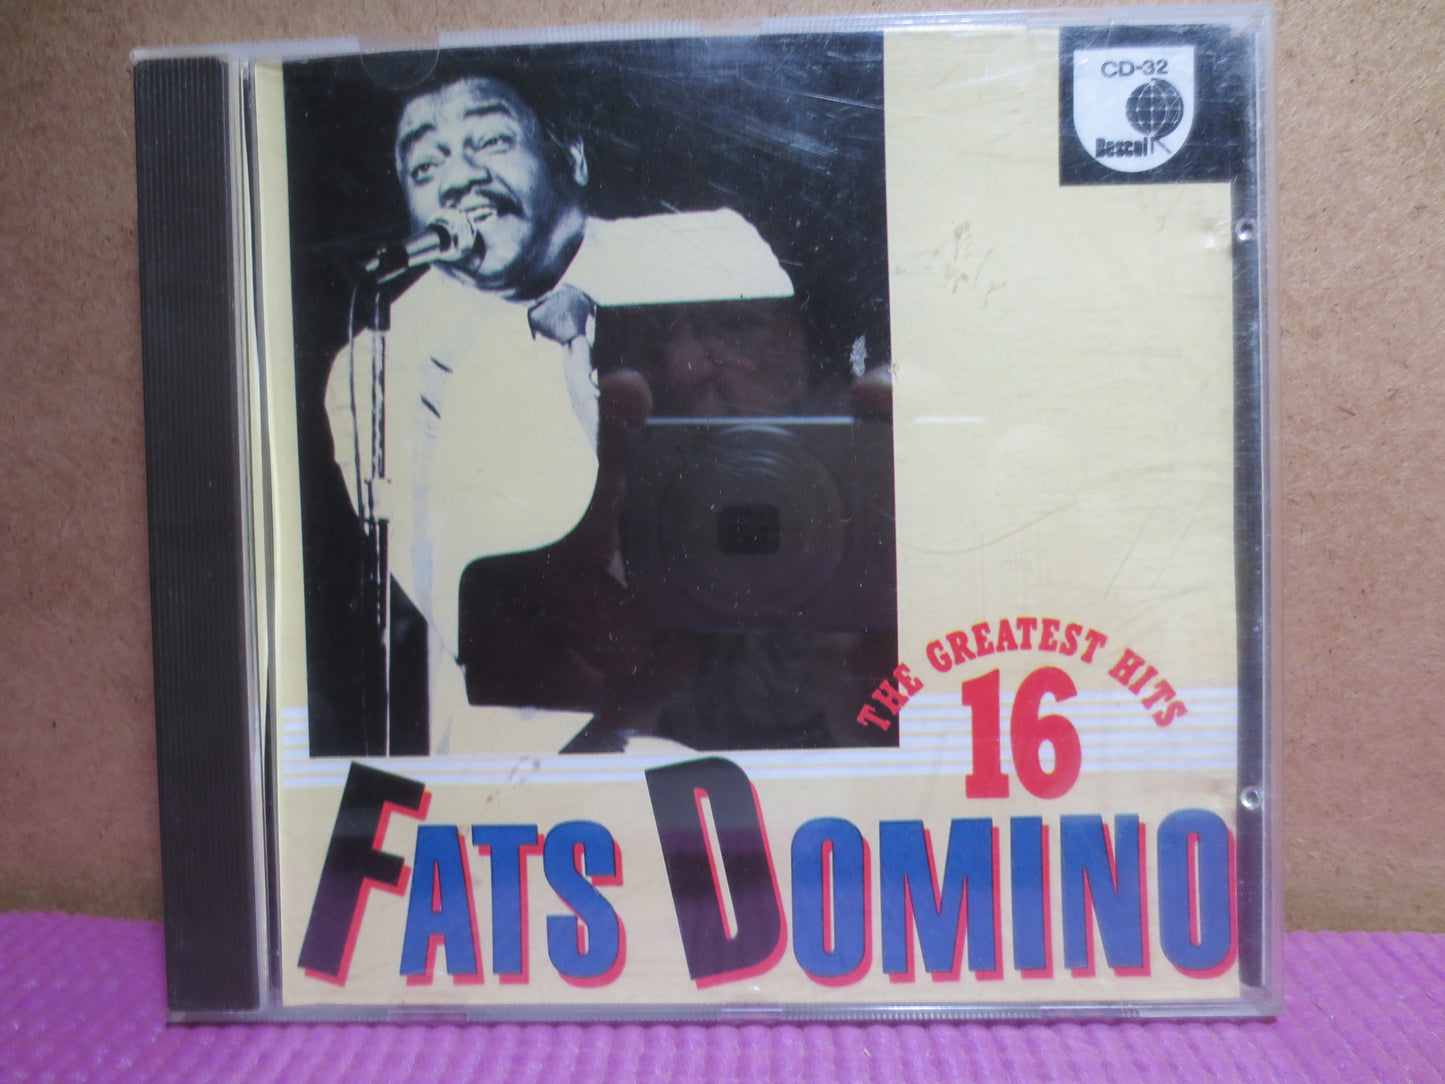 FATS DOMINO, The 16 Greatest Hits, Fats Domino Cd, Fats Domino Lp, Vintage Compact Disc, Piano Rock Cd, Pop Cd, Compact Discs